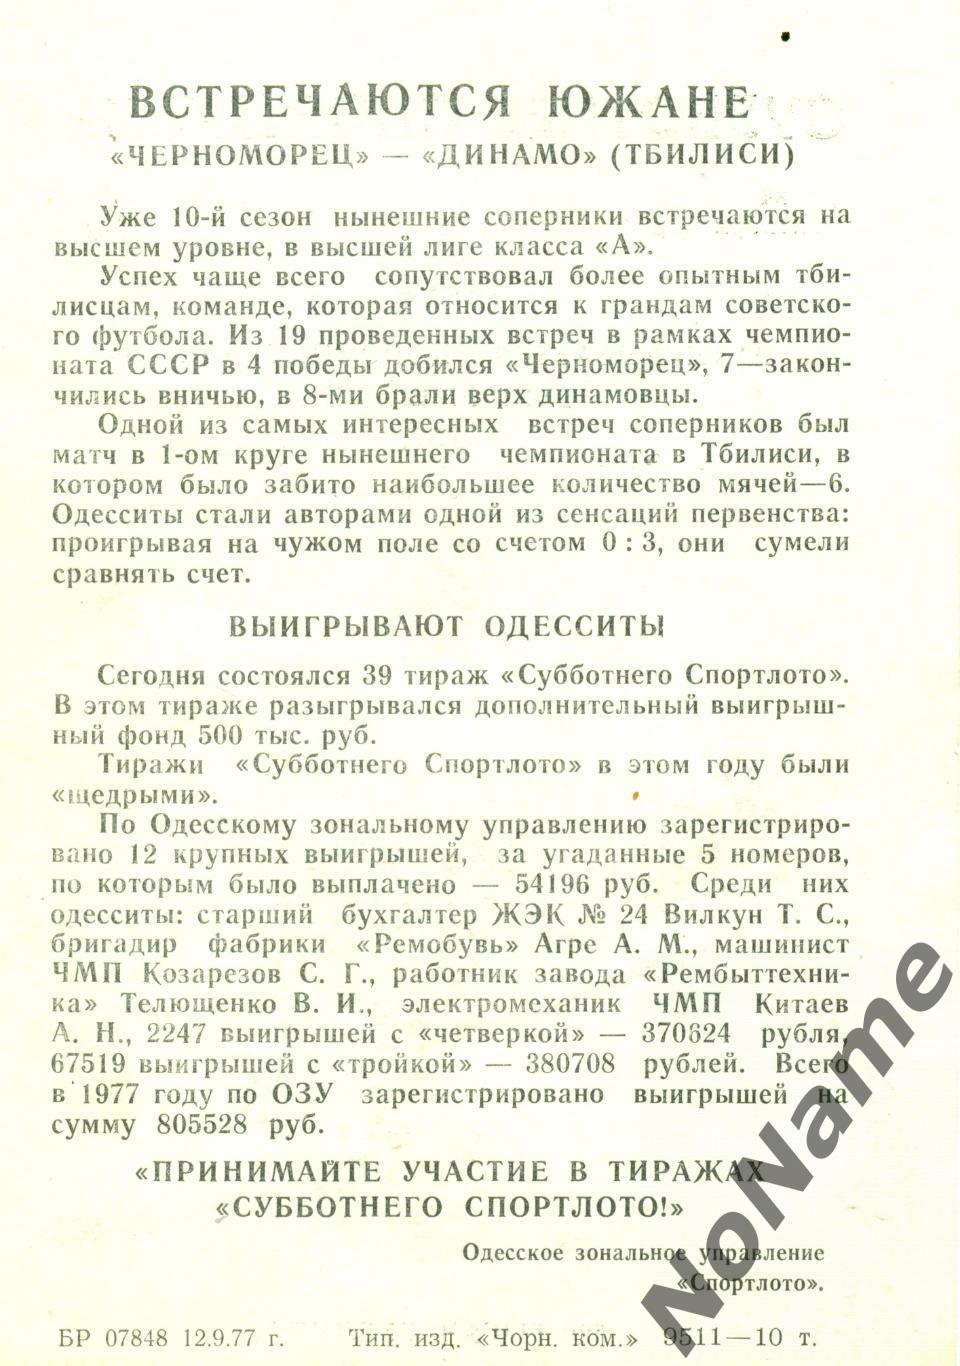 Субботнее спортлото . г.Одесса . 24 сентября 1977 г. 1